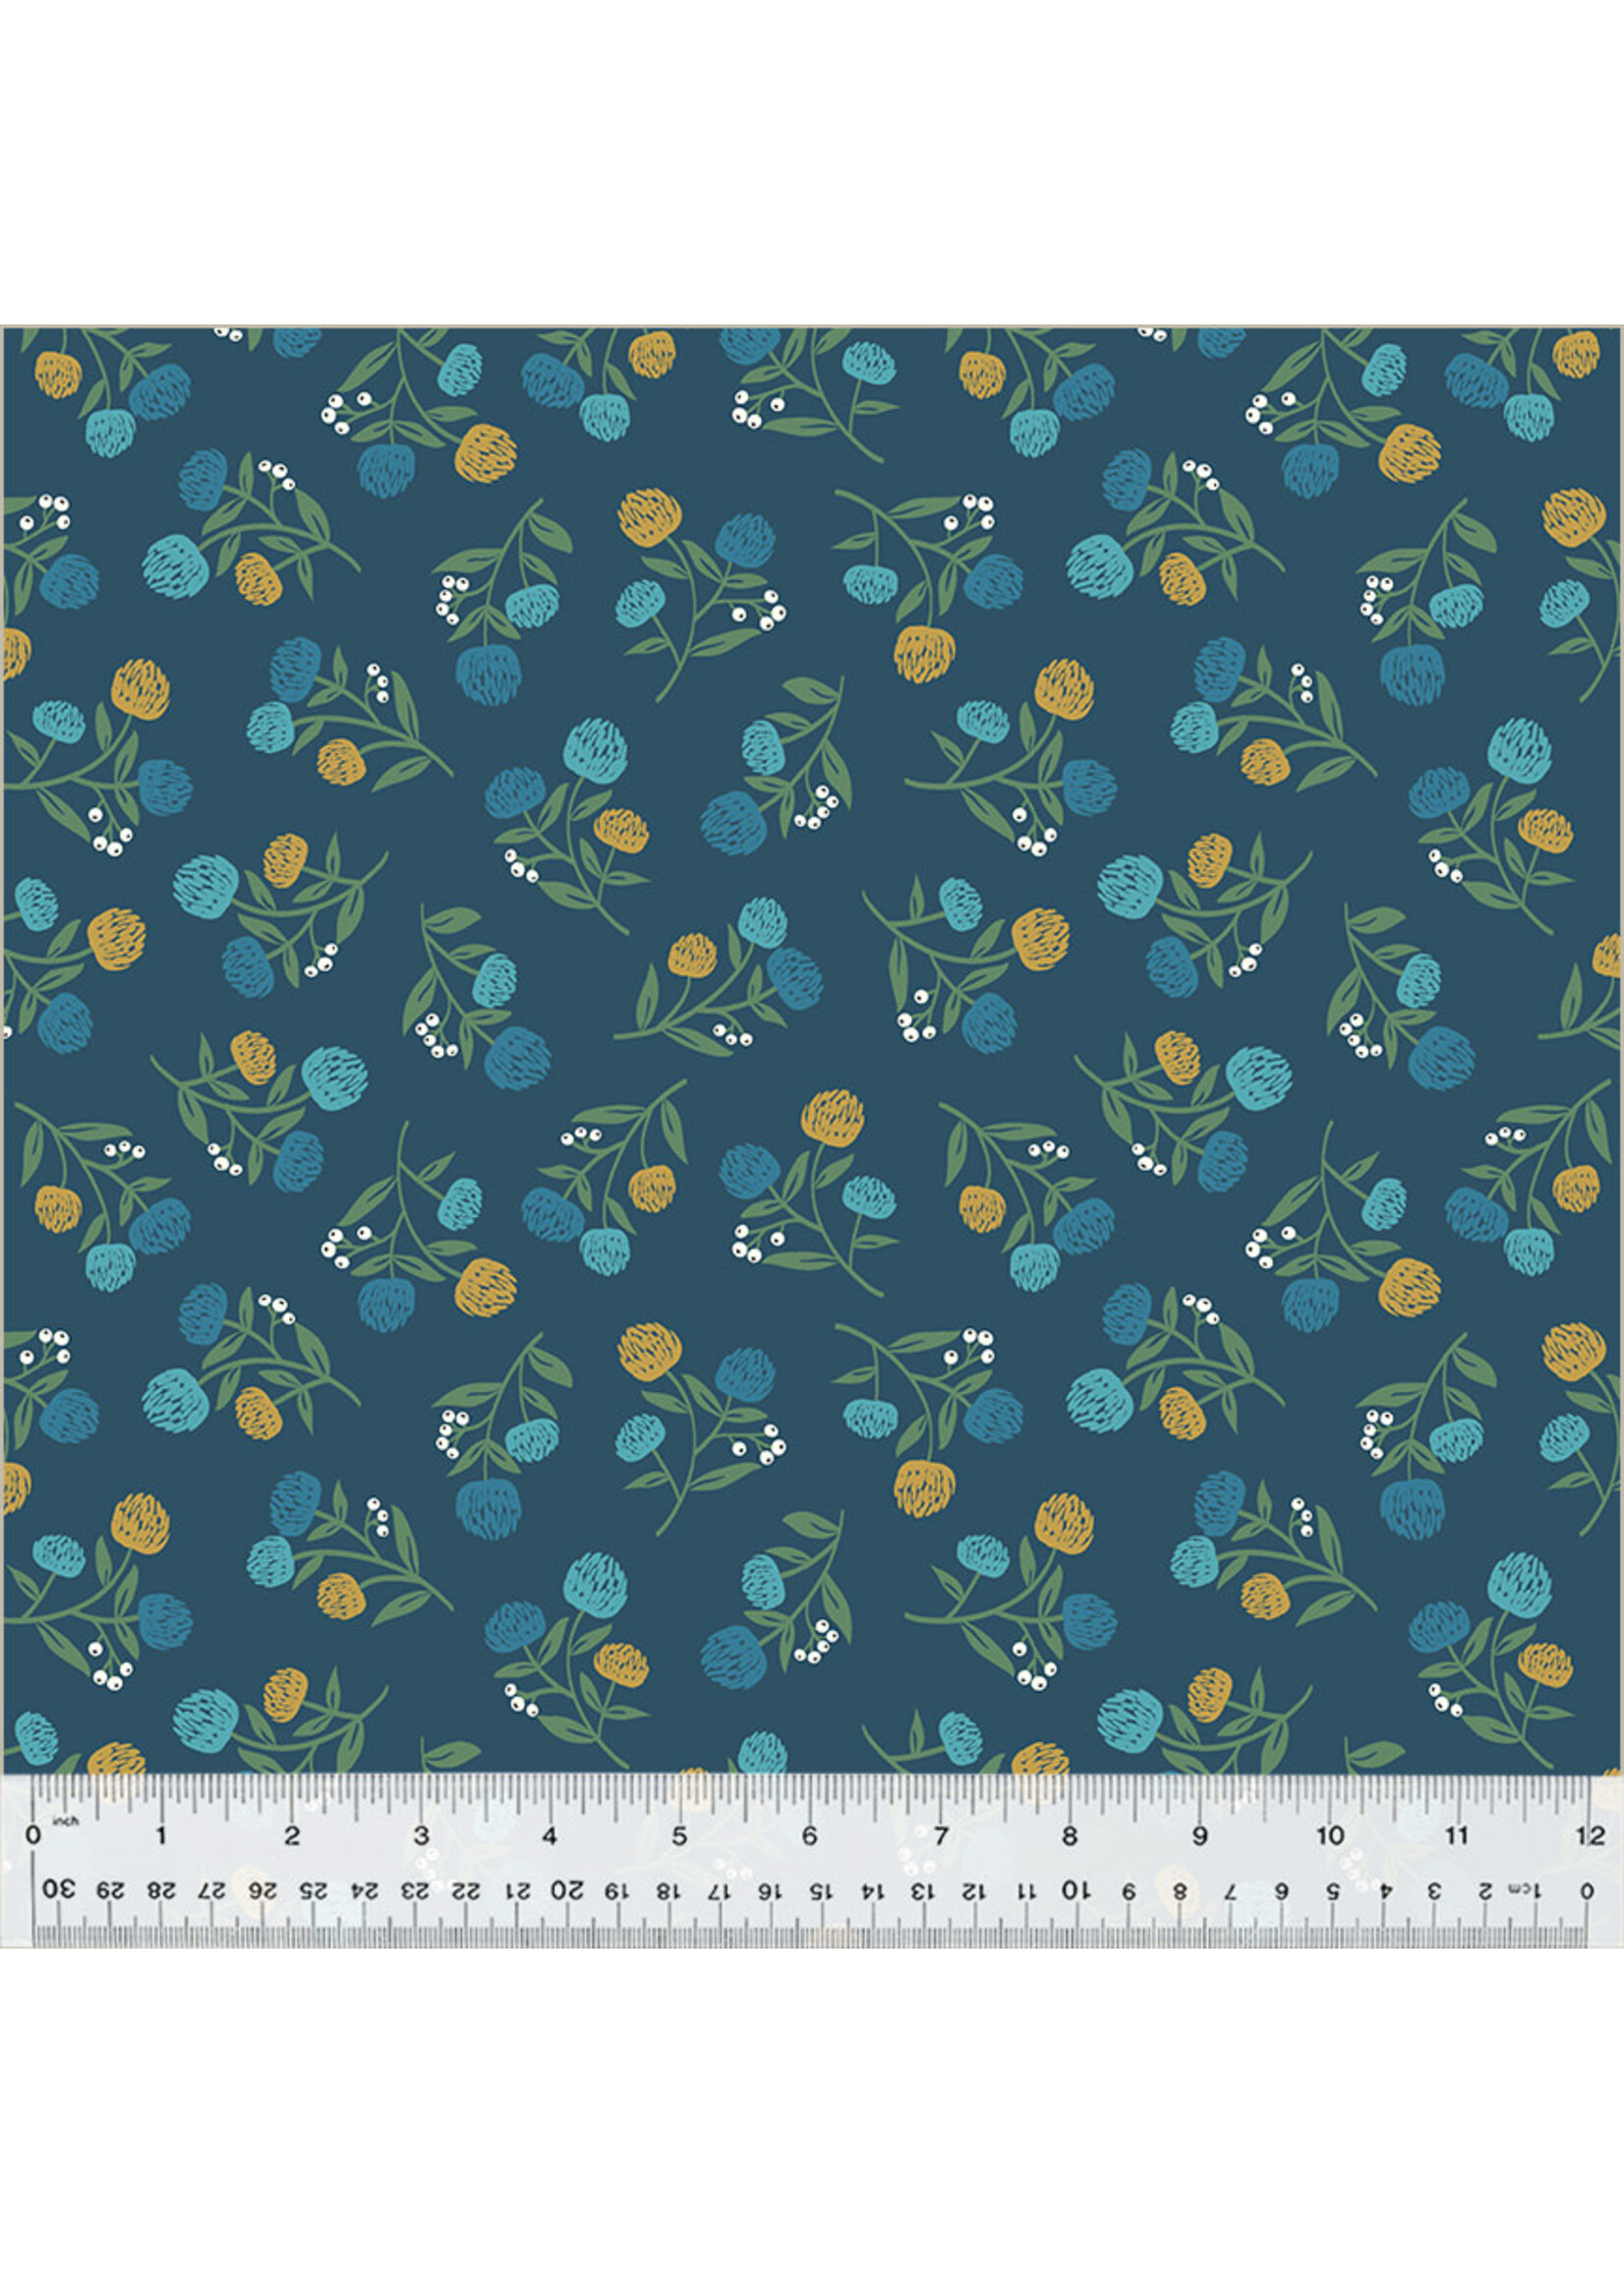 Windham Fabrics Clover & Dot - Clover - Dark Blue - 538632